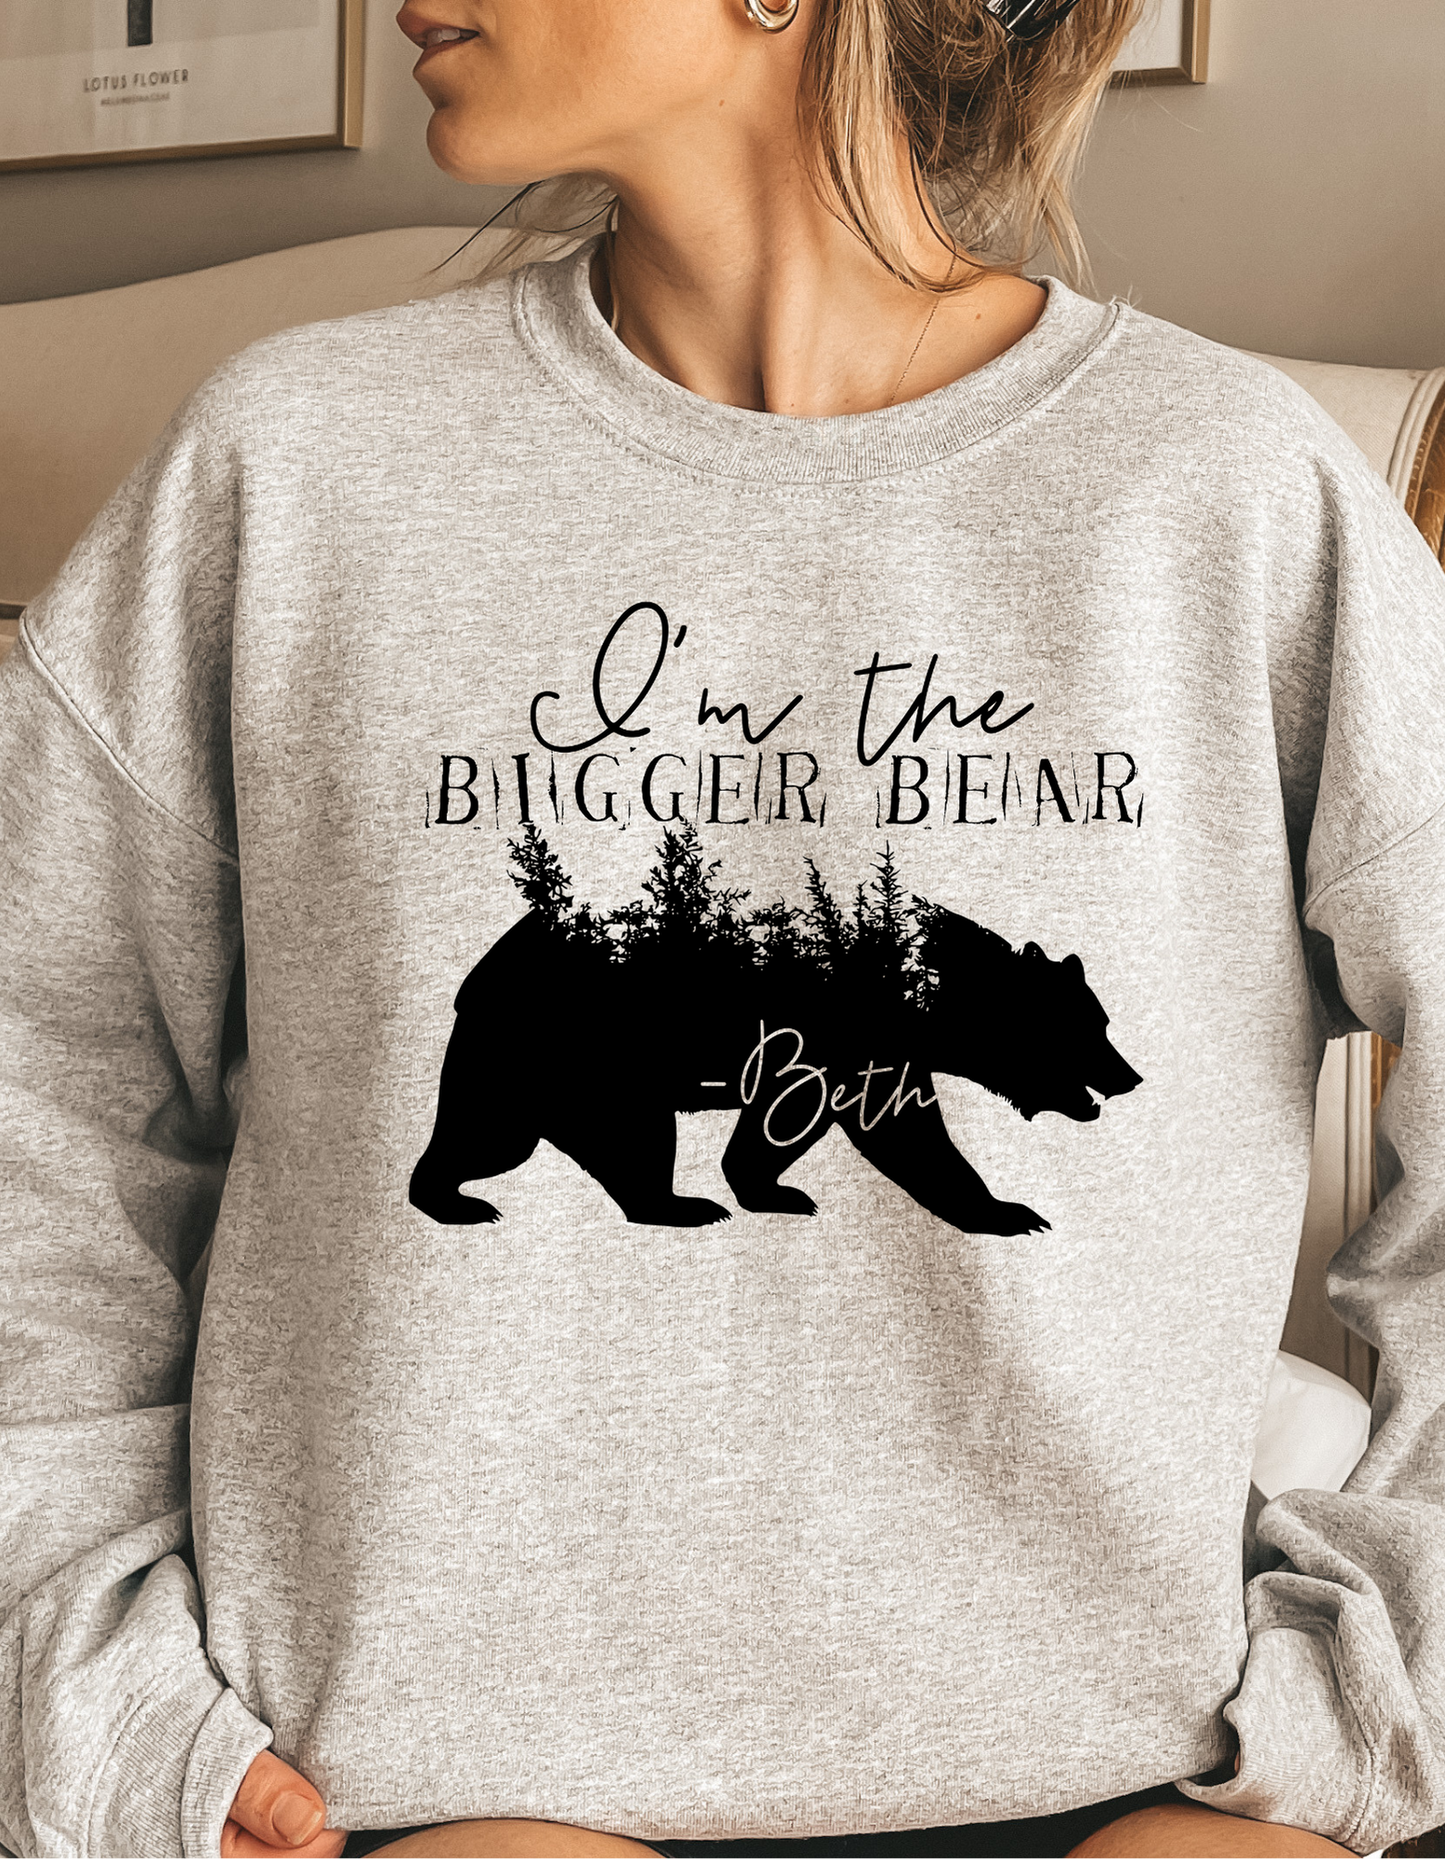 I'm the Bigger Bear -Beth Dutton Crew Sweatshirt